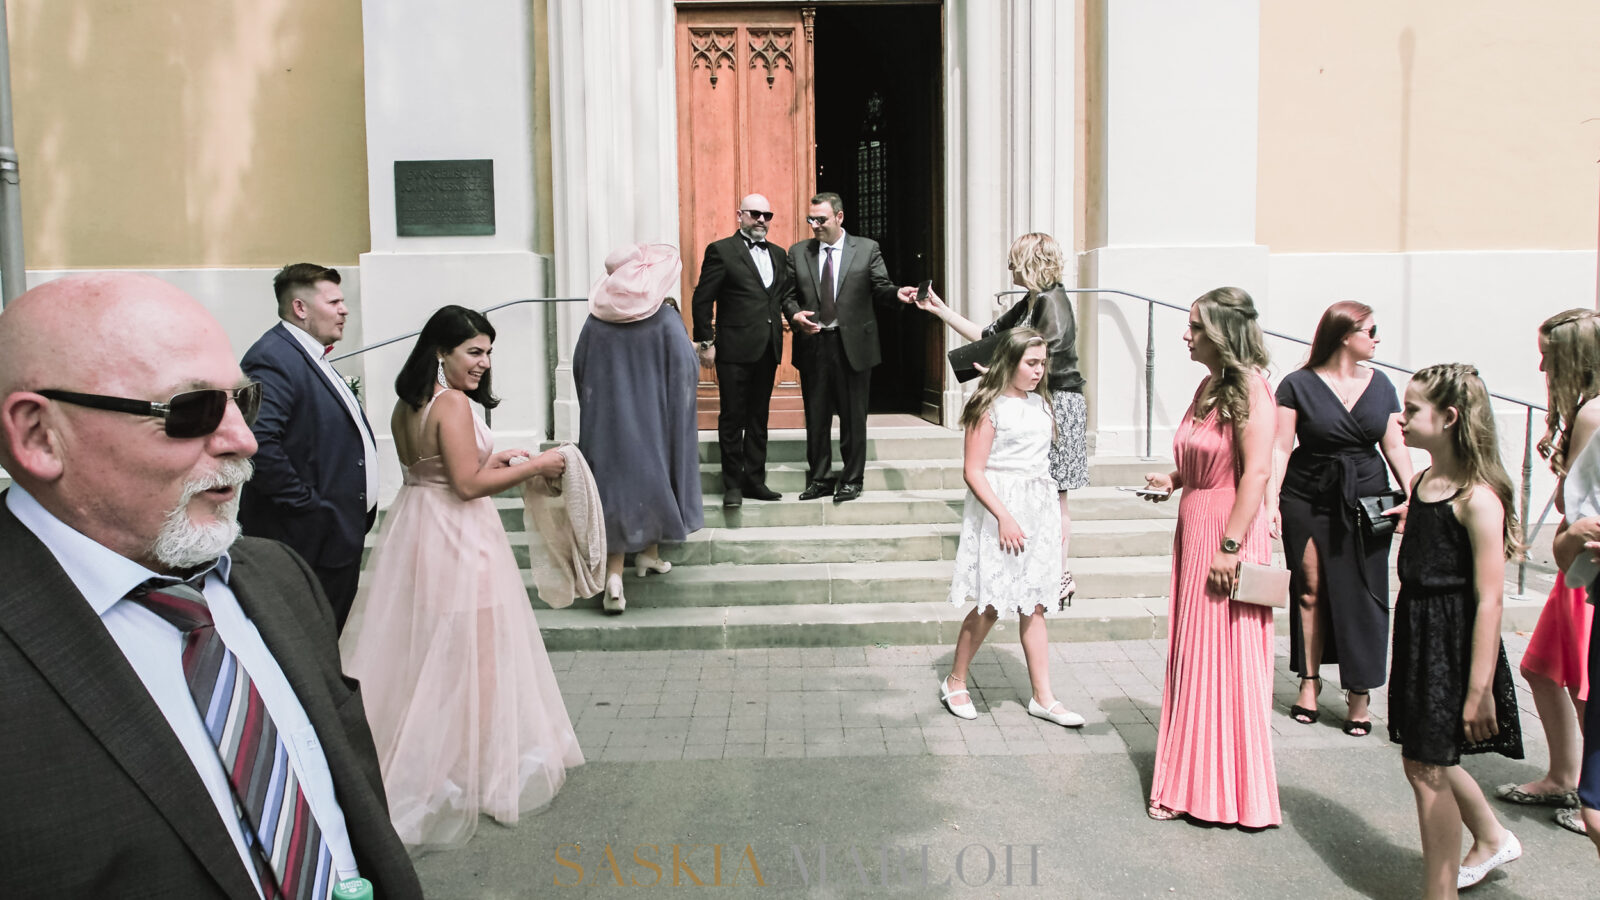 RHEINGAU-ITALIAN-WEDDING-ITALIENISCHE-HOCHZEIT-FOTO-SASKIA-MARLOH-PHOTOGRAPHY-205